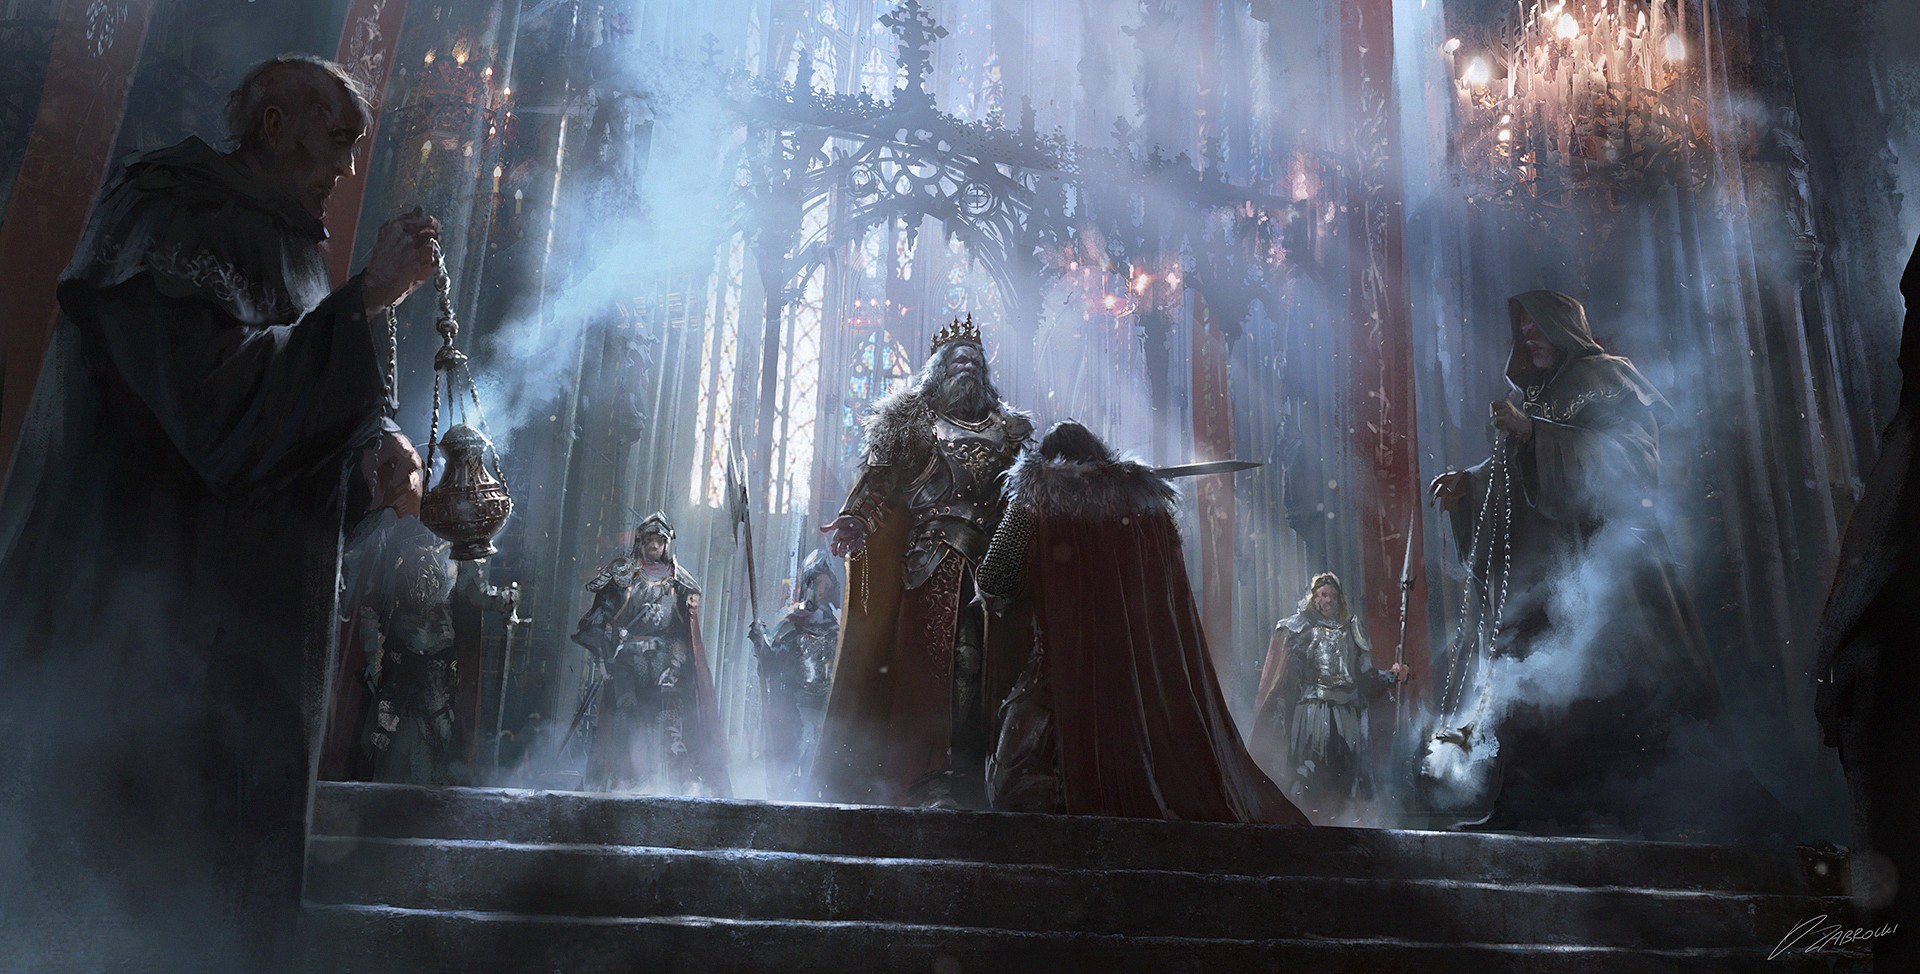 General 1920x974 fantasy art king knight artwork fantasy men kneeling men watermarked